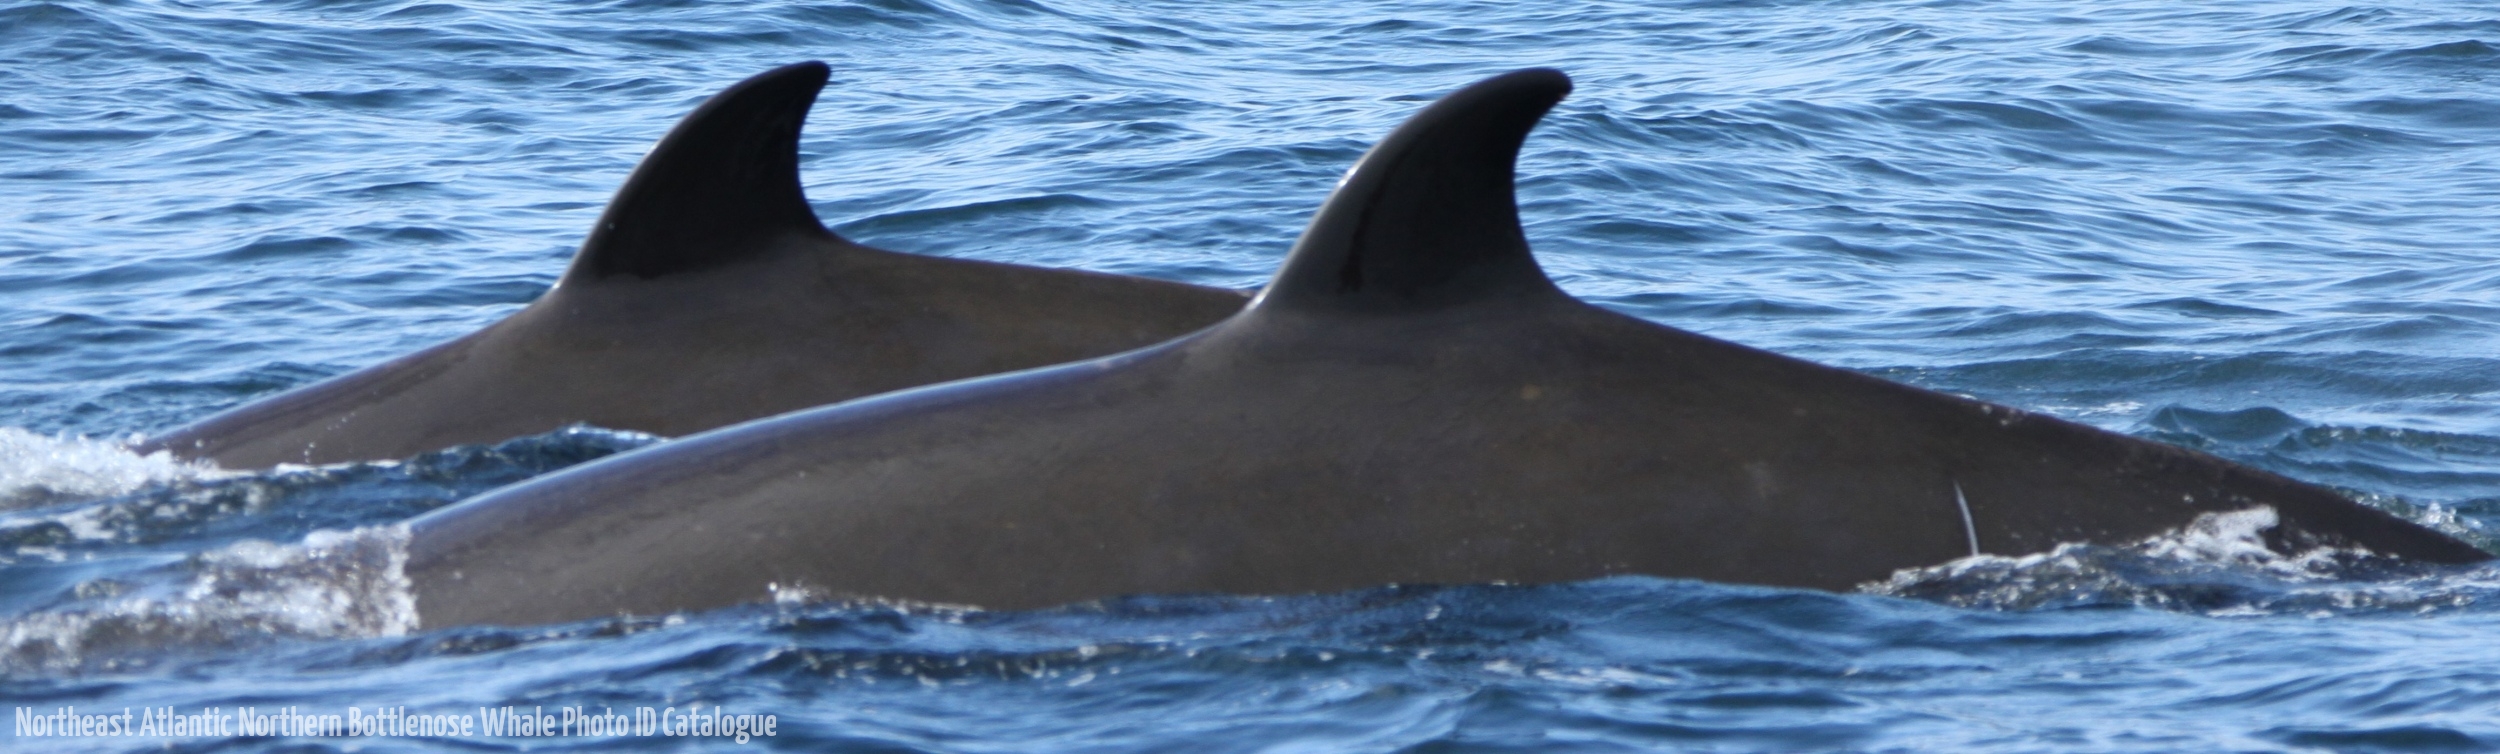 Whale ID: 0004,  Date taken: 24-06-2013,  Photographer: Paul H. Ensor